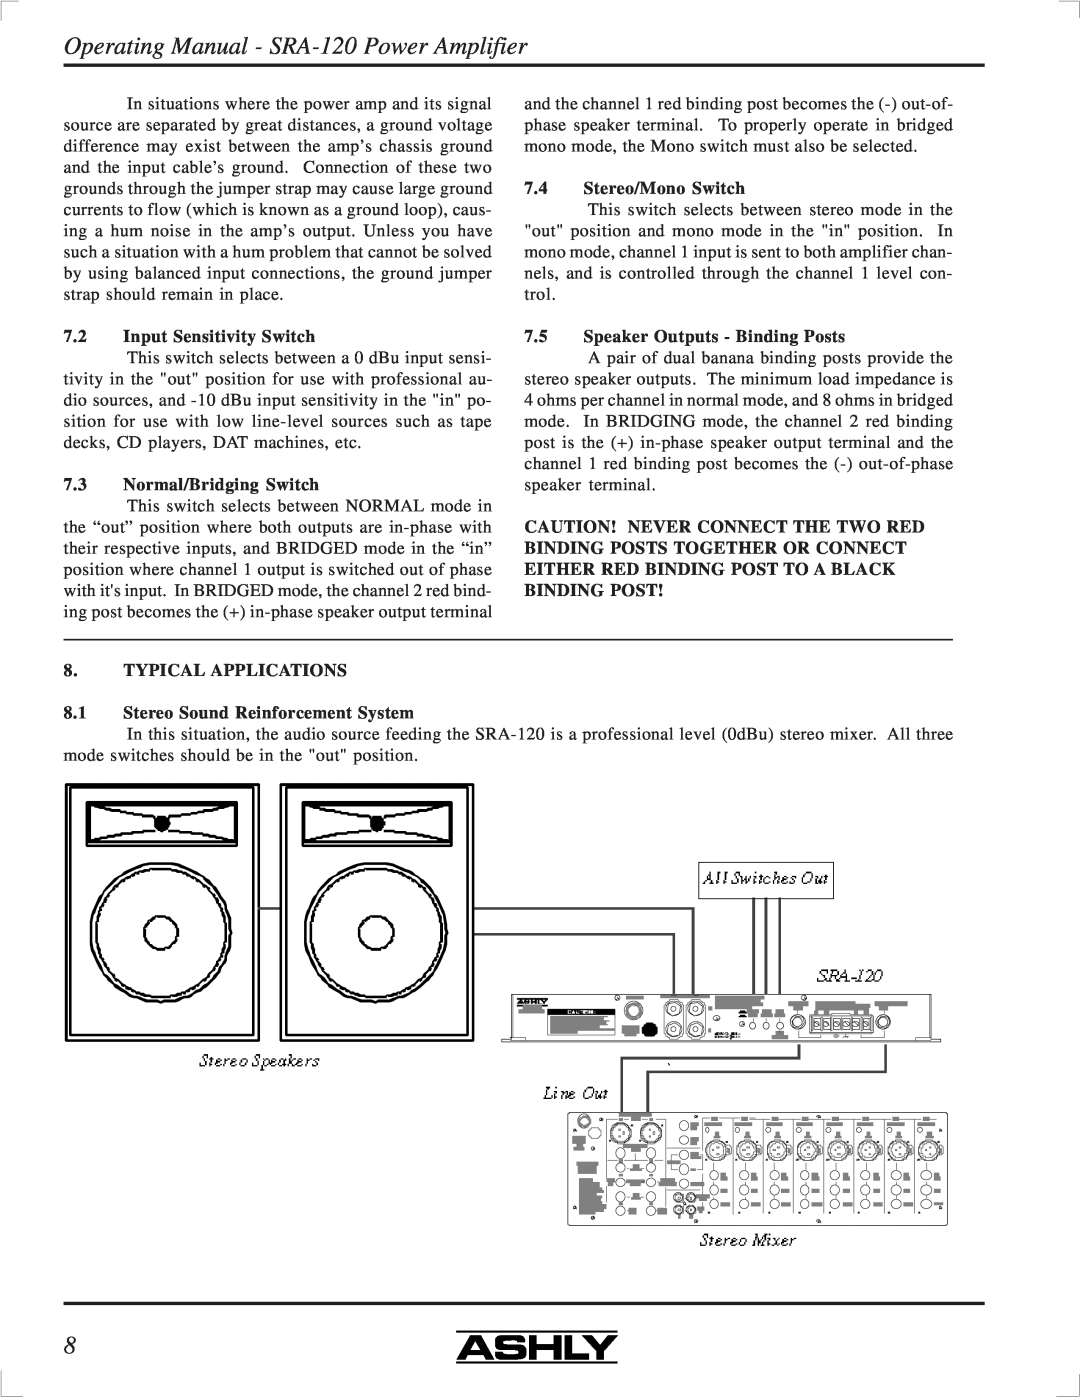 Ashly manual Operating Manual - SRA-120Power Amplifier, 7.2Input Sensitivity Switch, 7.3Normal/Bridging Switch 